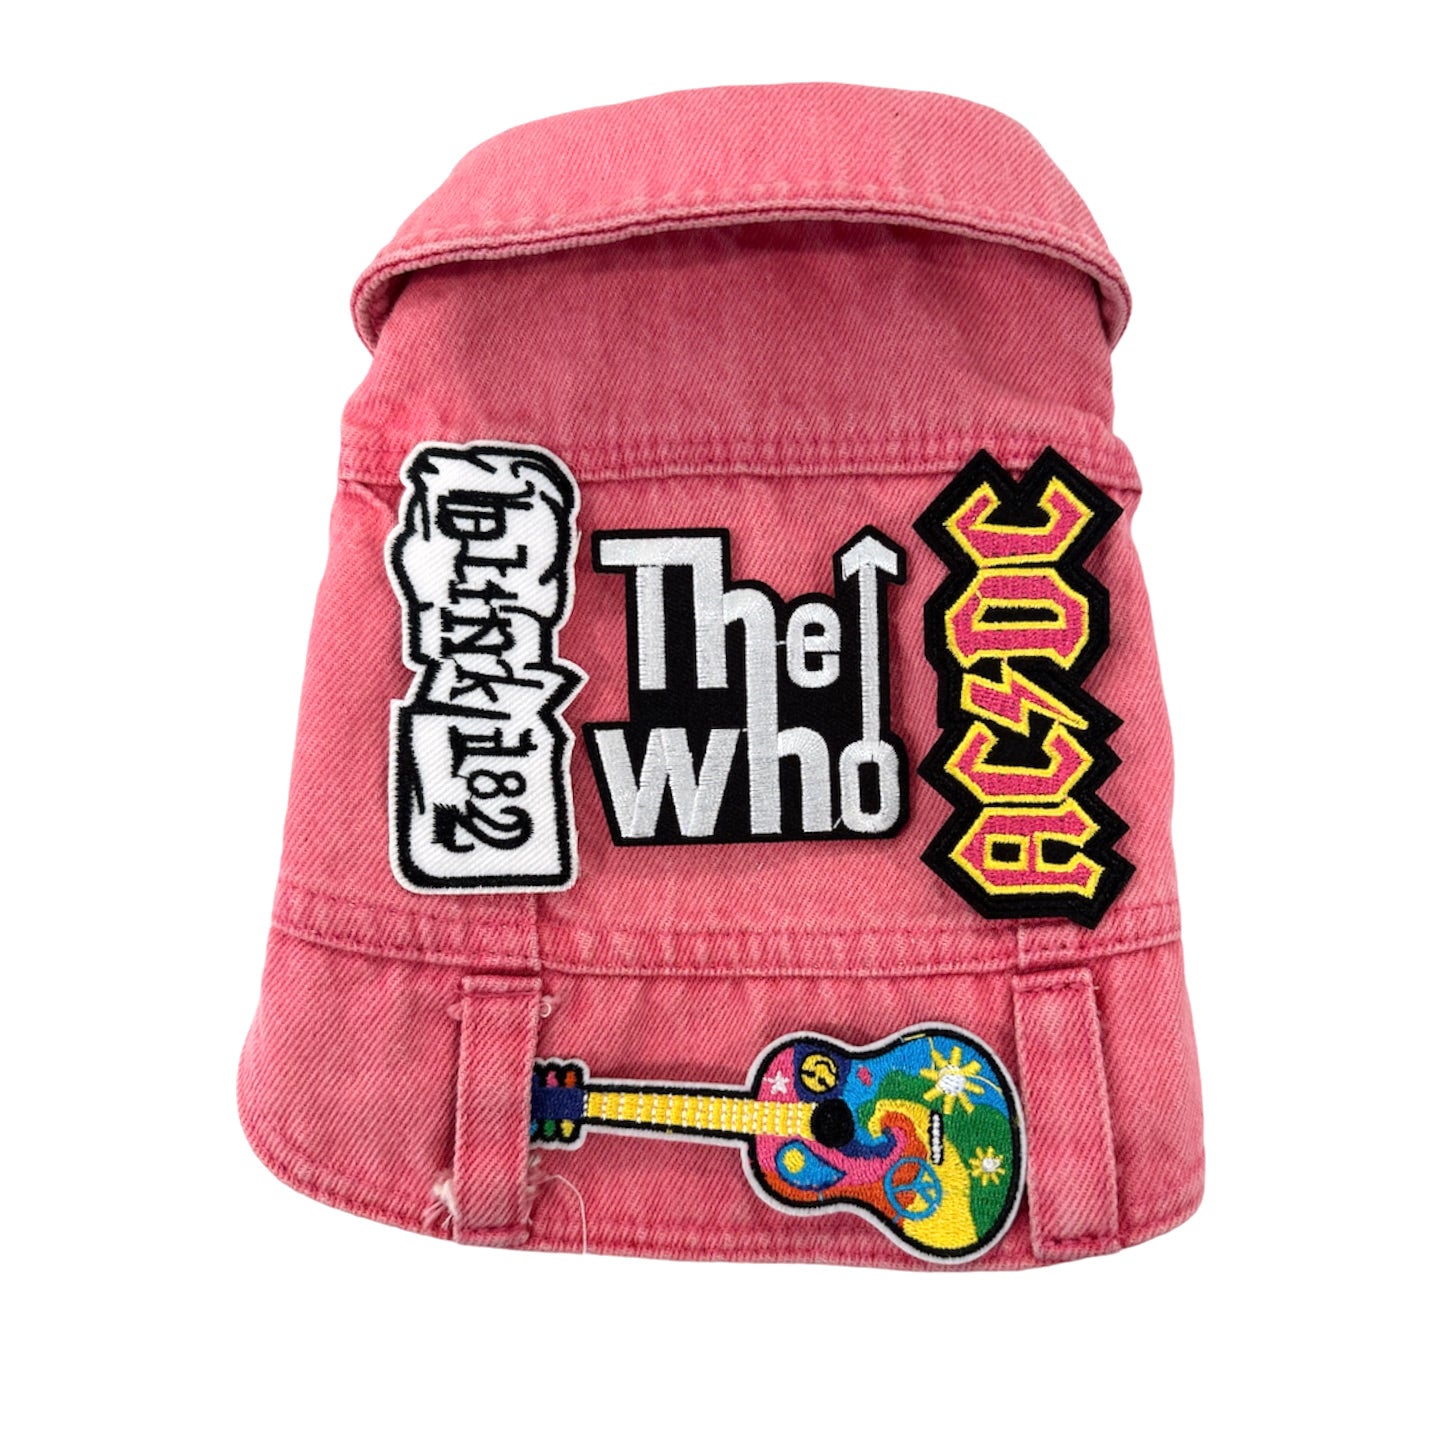 Pink Rocker Vest - The Who